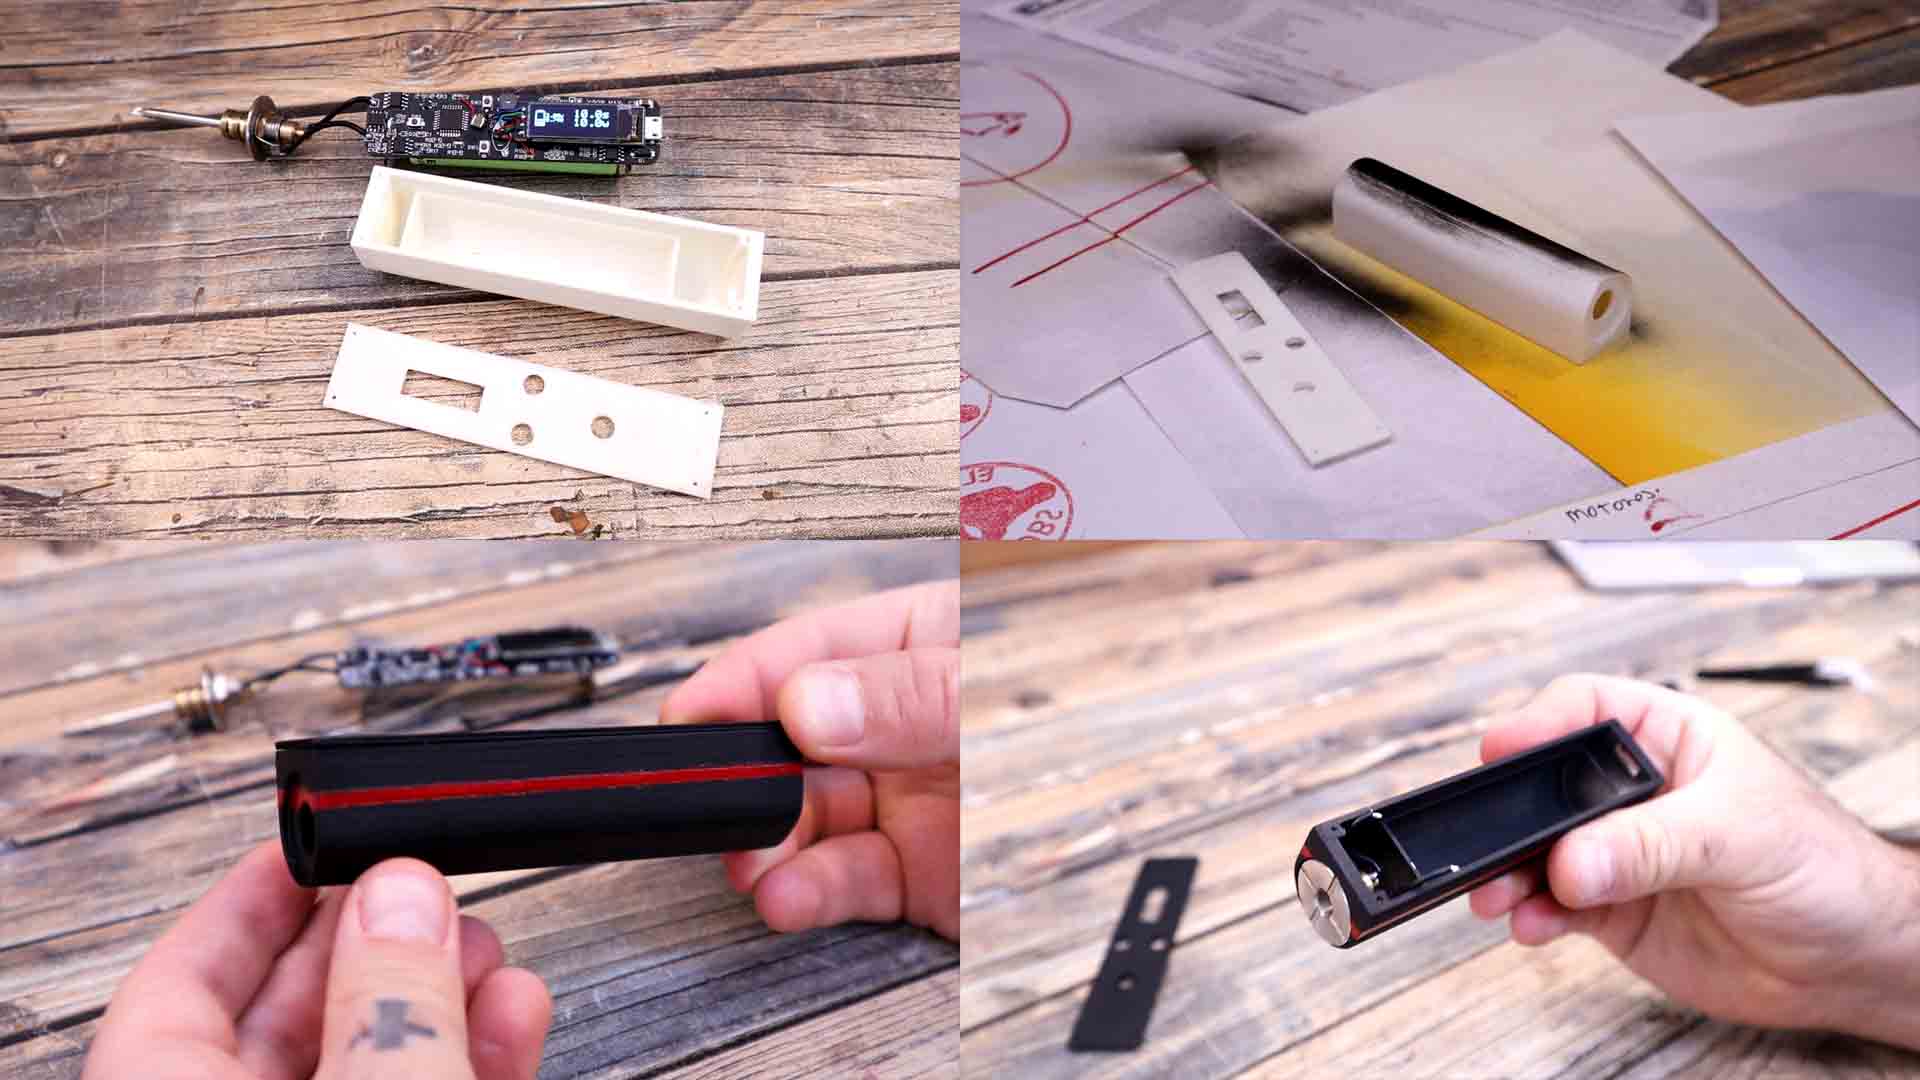 schematic arduino homeamde battery portable soldering iron